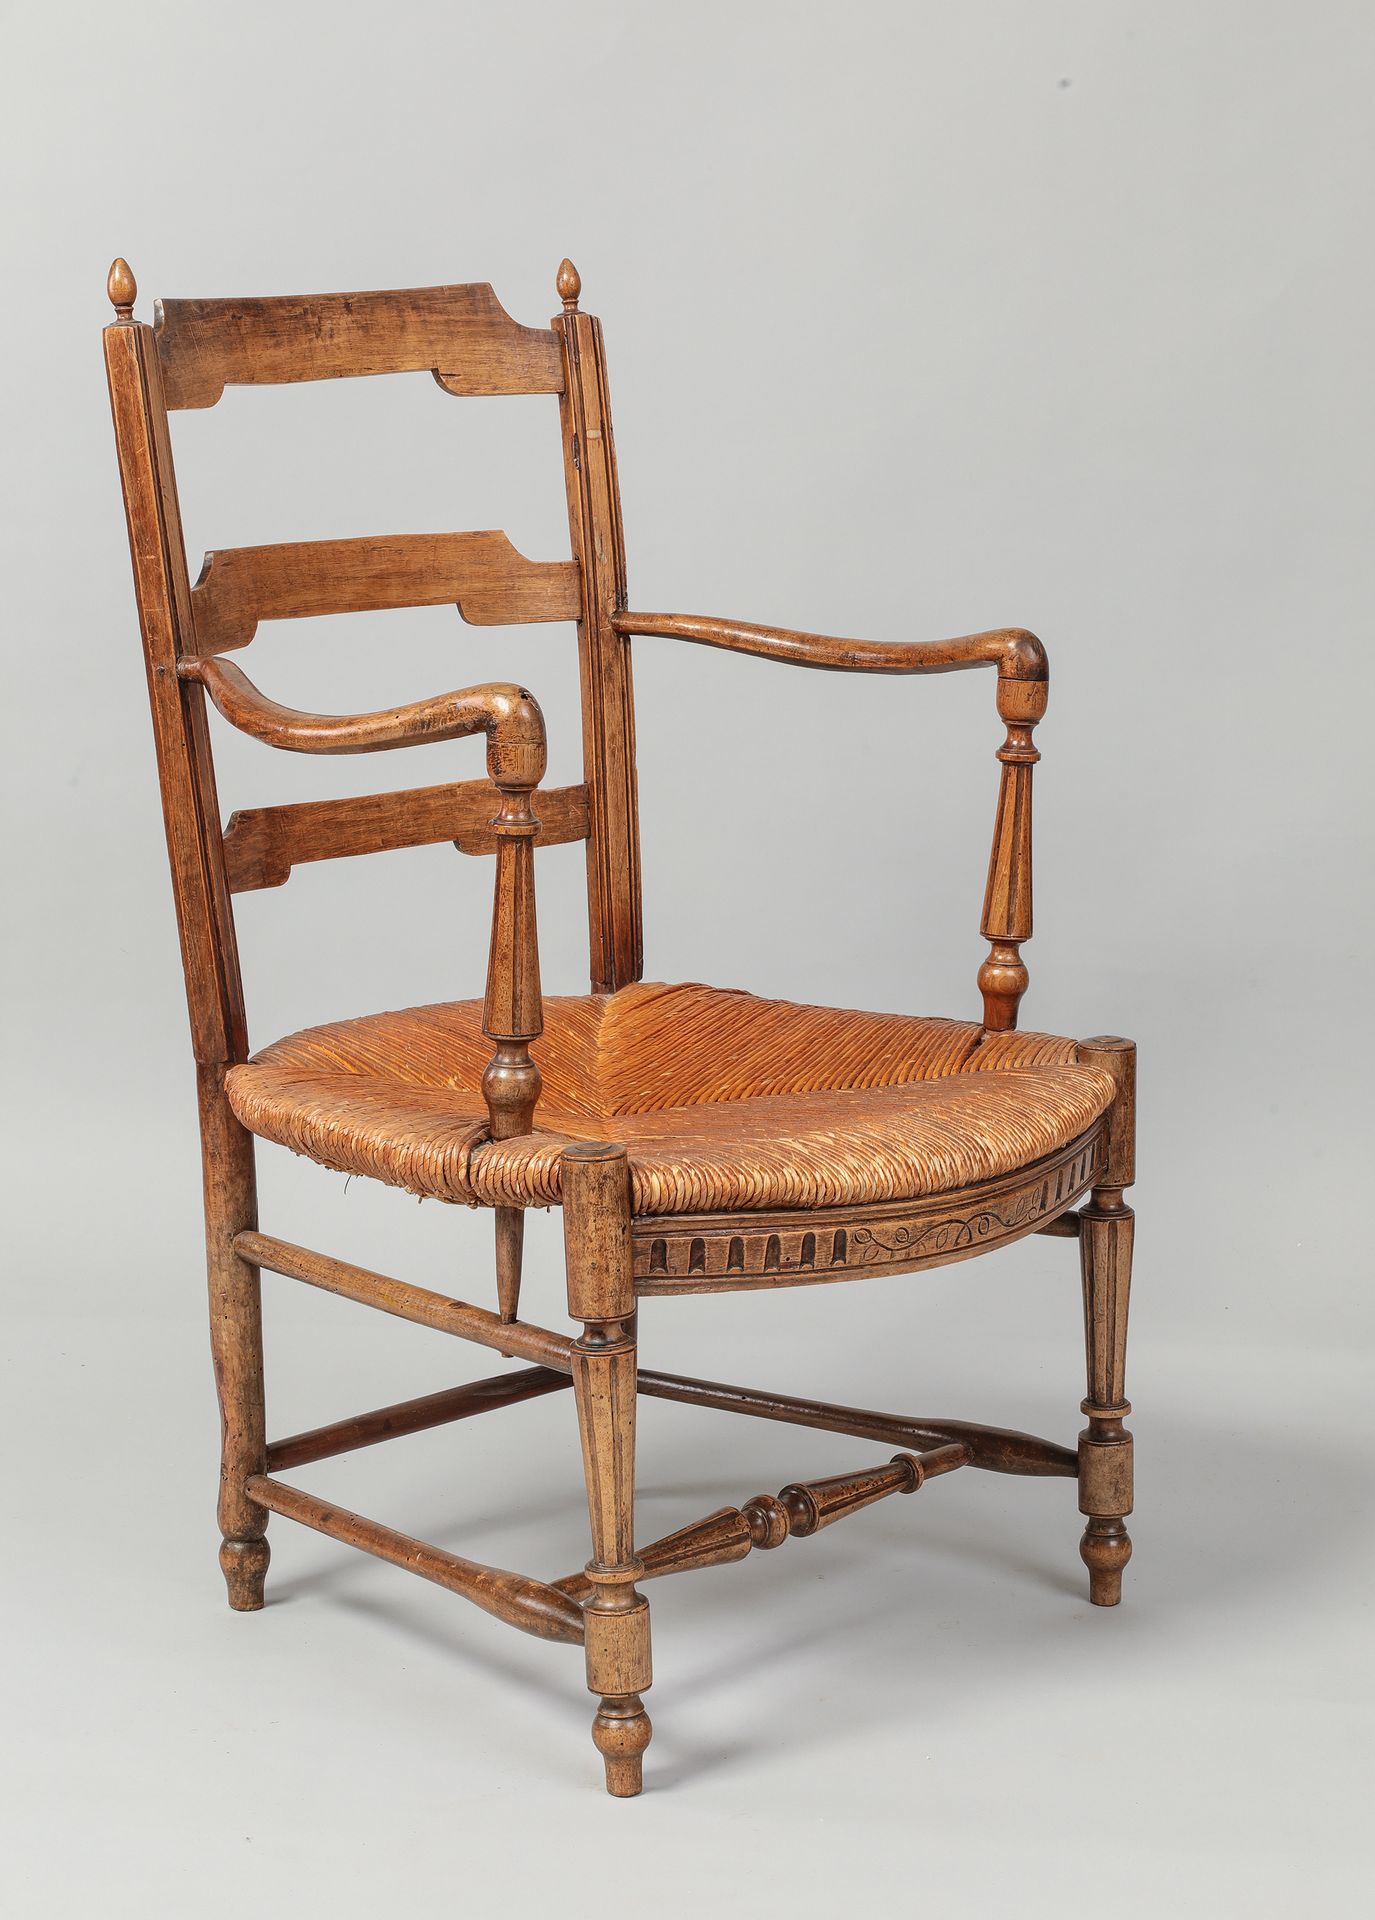 Null 模制和雕刻的胡桃木草椅，有凹陷的扶手。

基础

18世纪的省级作品

H.87厘米，宽54厘米，长58厘米